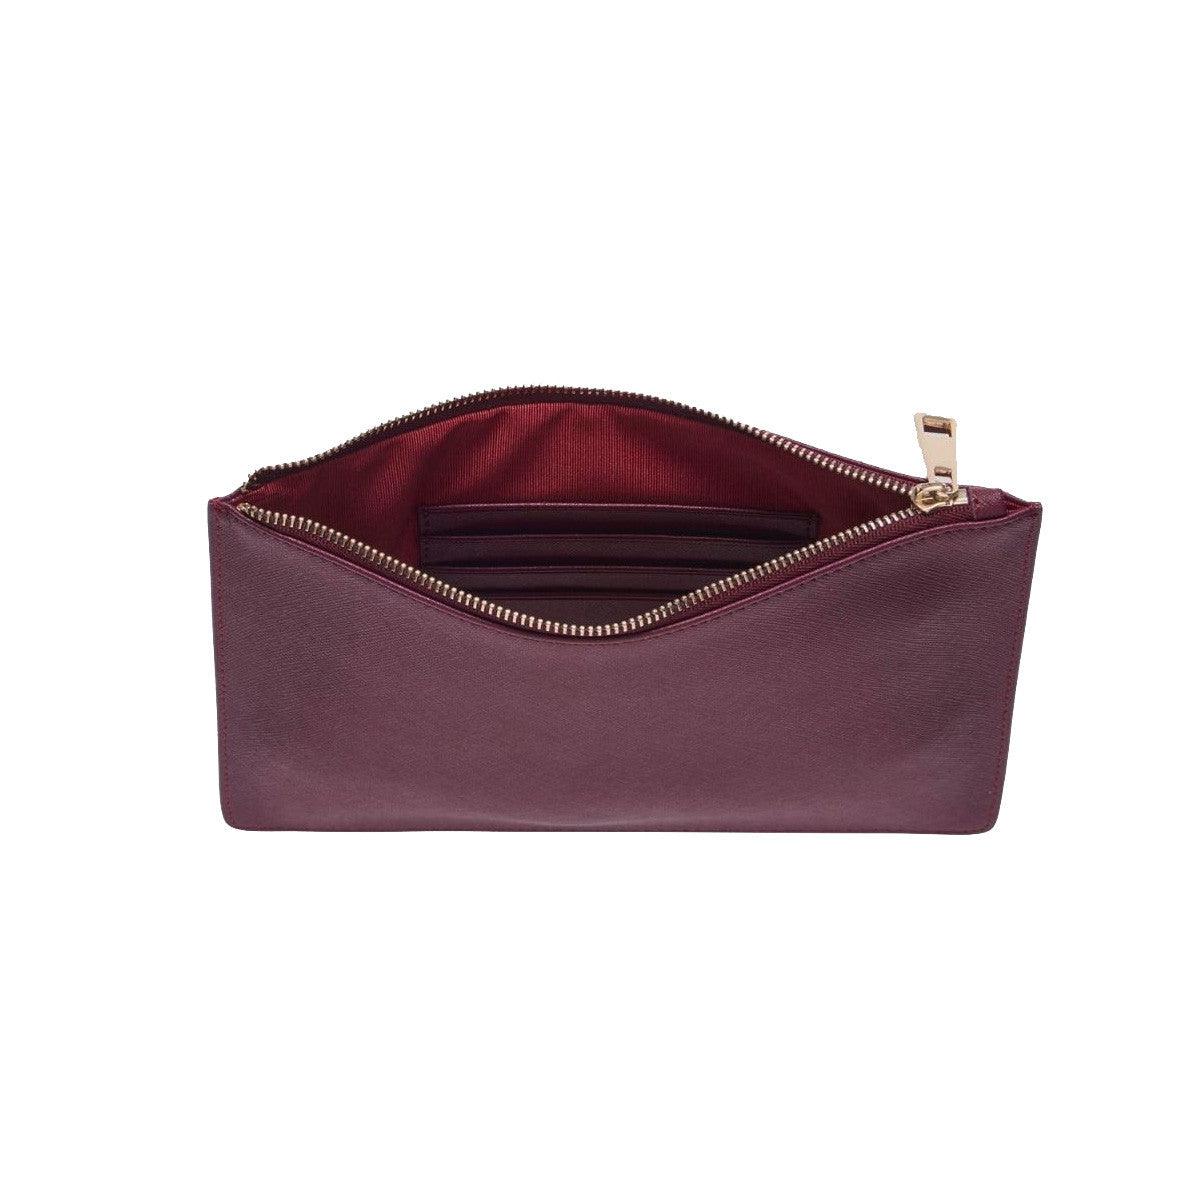 Burgundy Saffiano Leather Clutch | Pouch Bag - HB LONDON